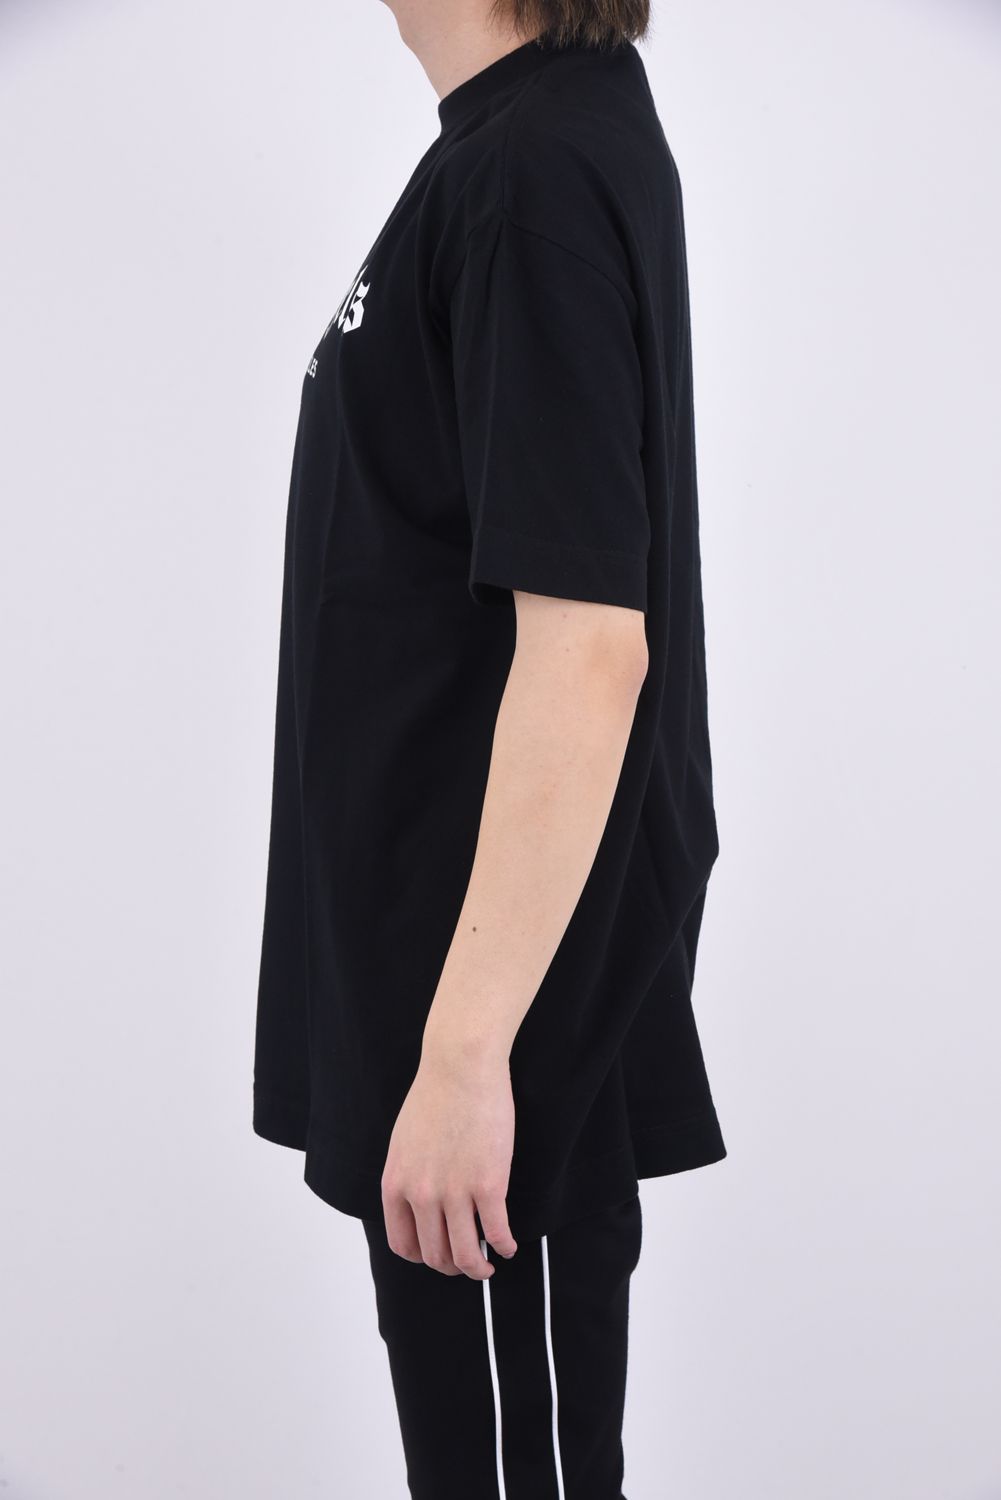 LA SPRAYED LOGO T-SHIRT / ロゴプリント スプレー クルーネックTシャツ ブラック - XS